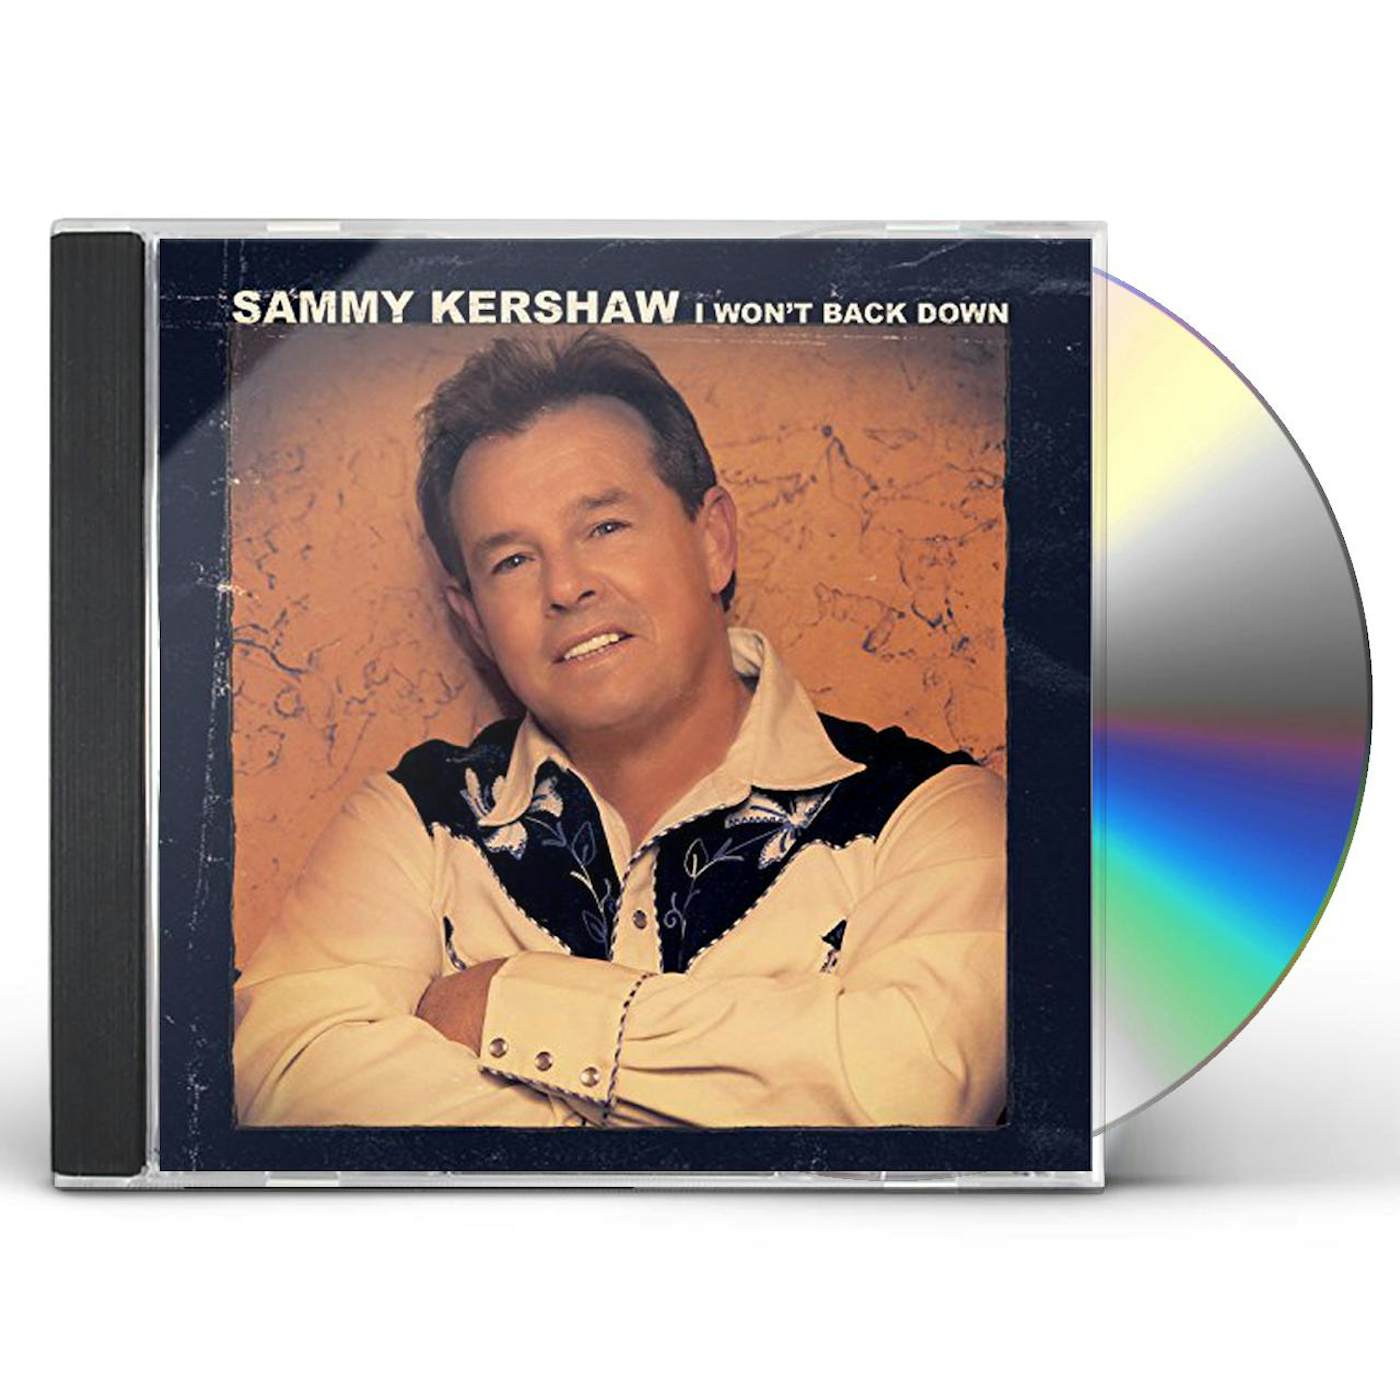 Sammy Kershaw WON'T BACK DOWN CD